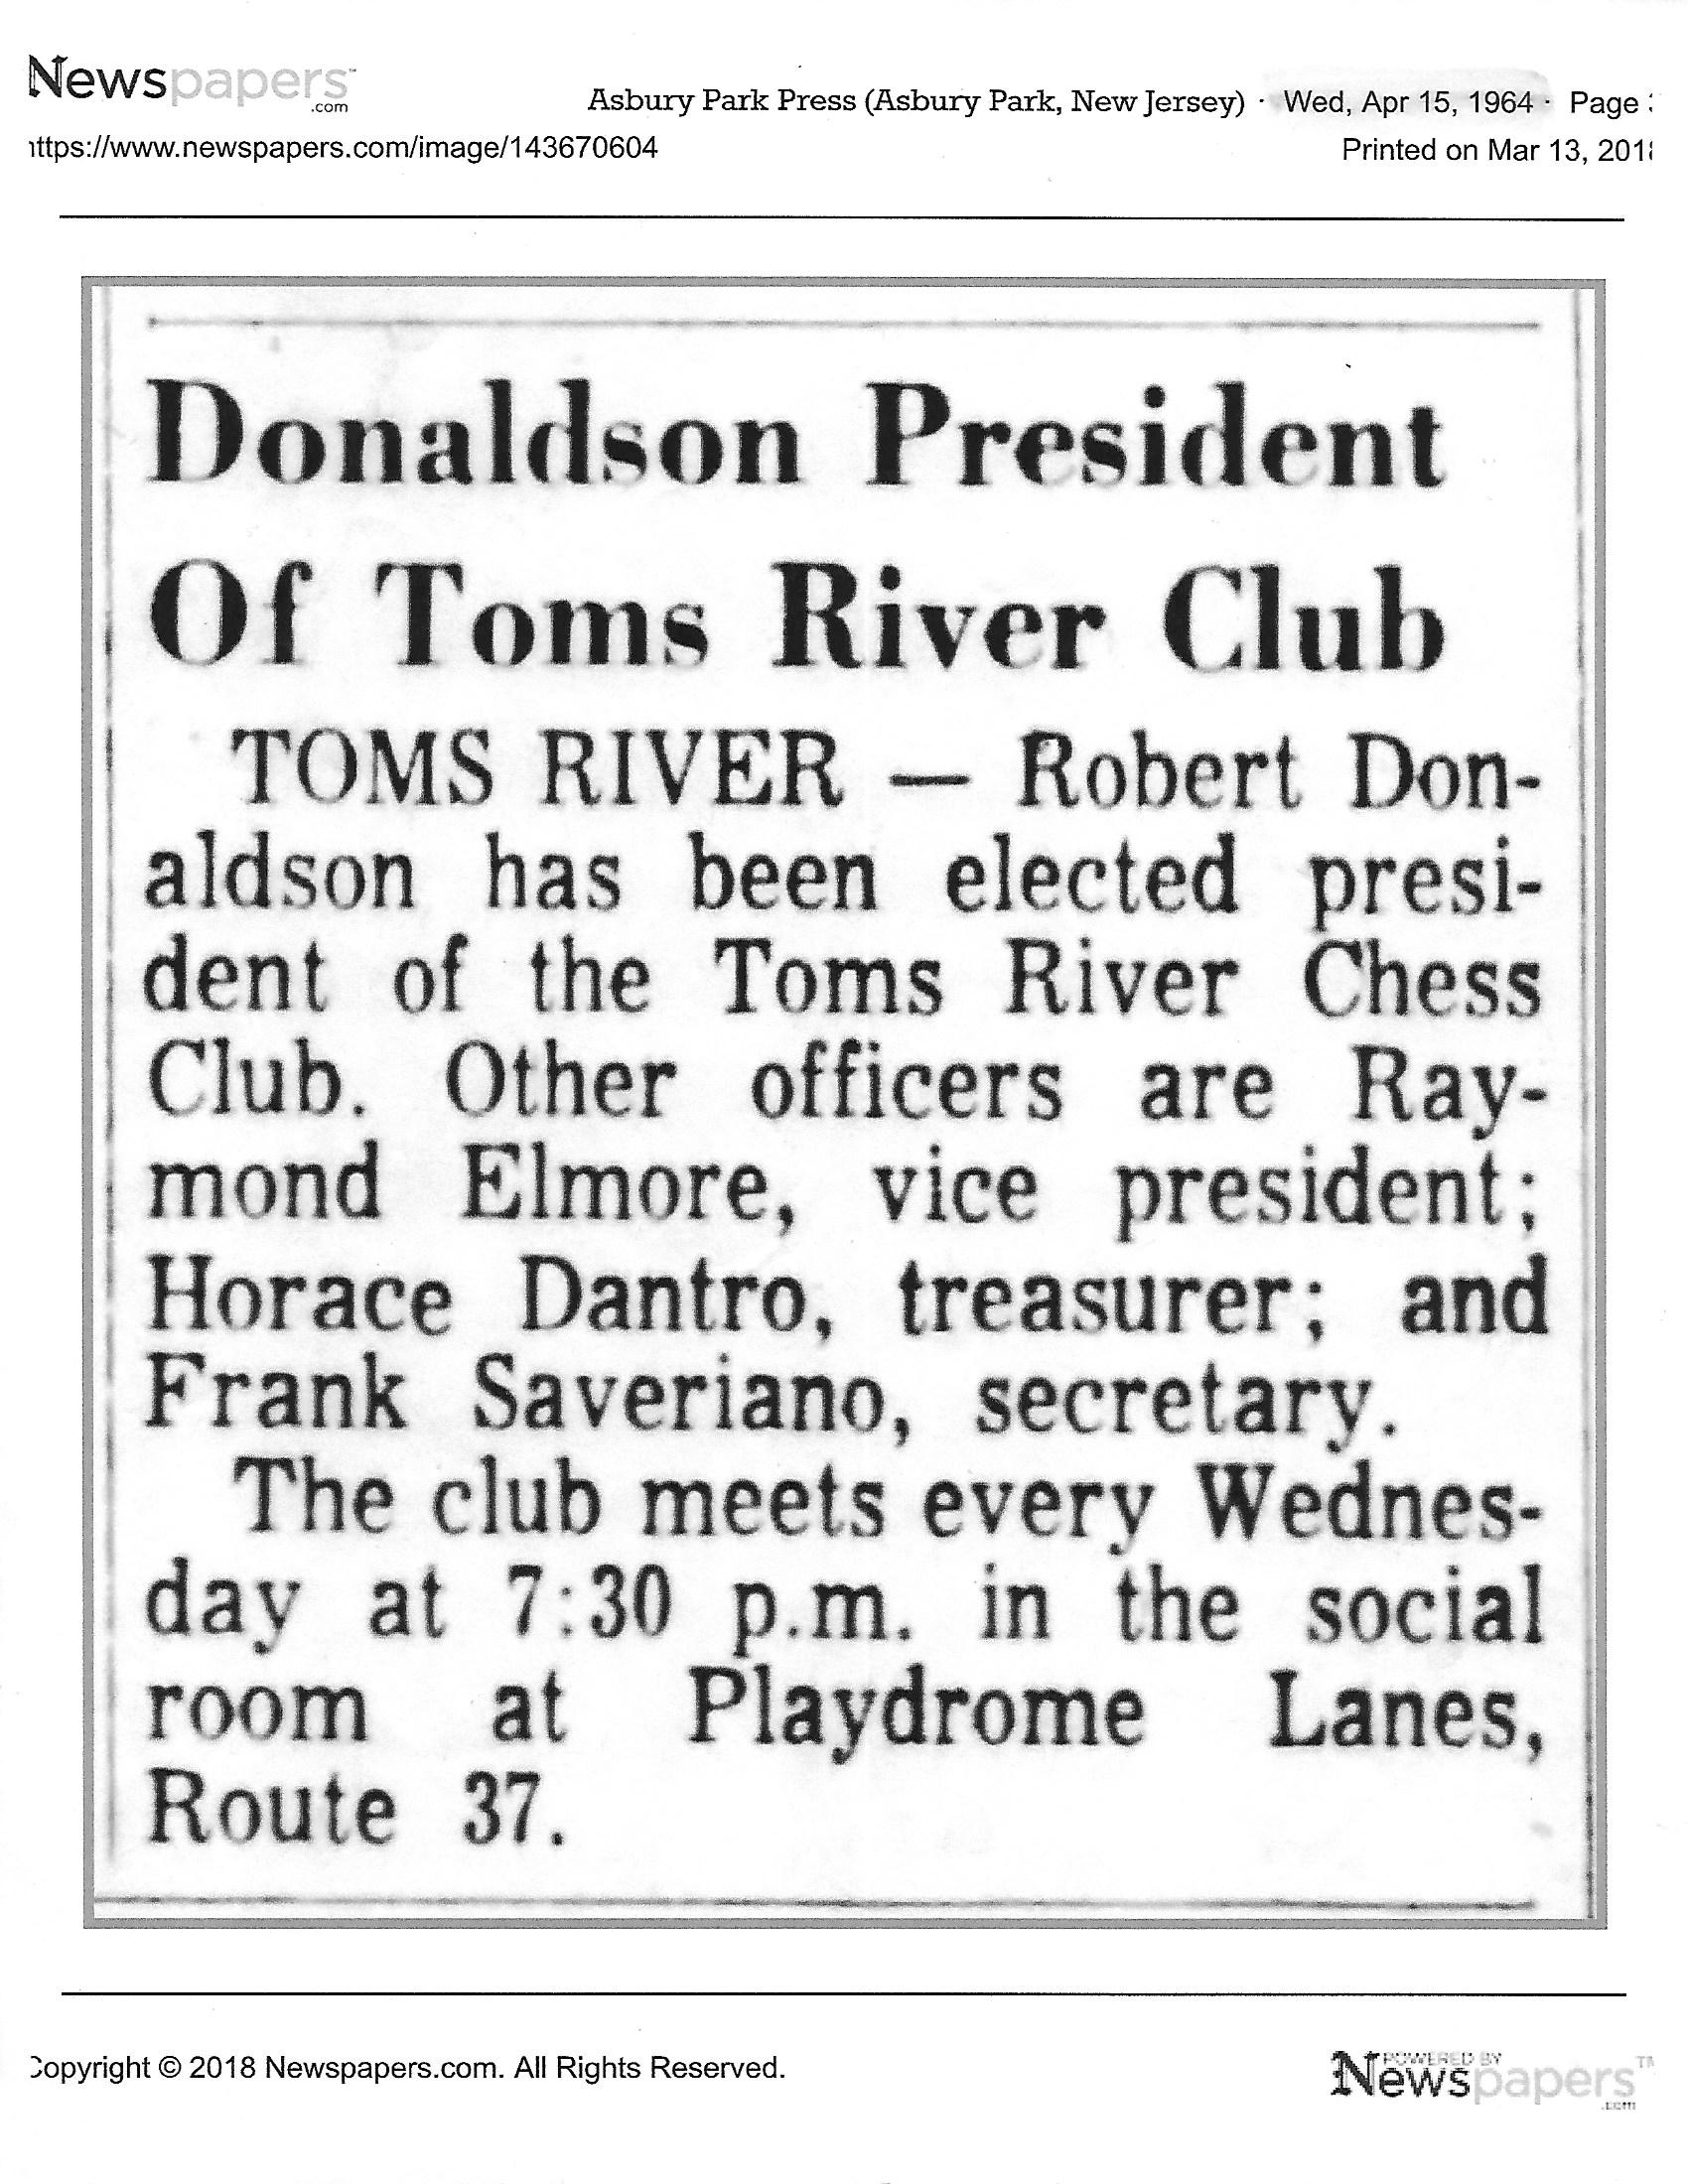 Asbury Park Press newspaper article, dated Apr 15, 1964